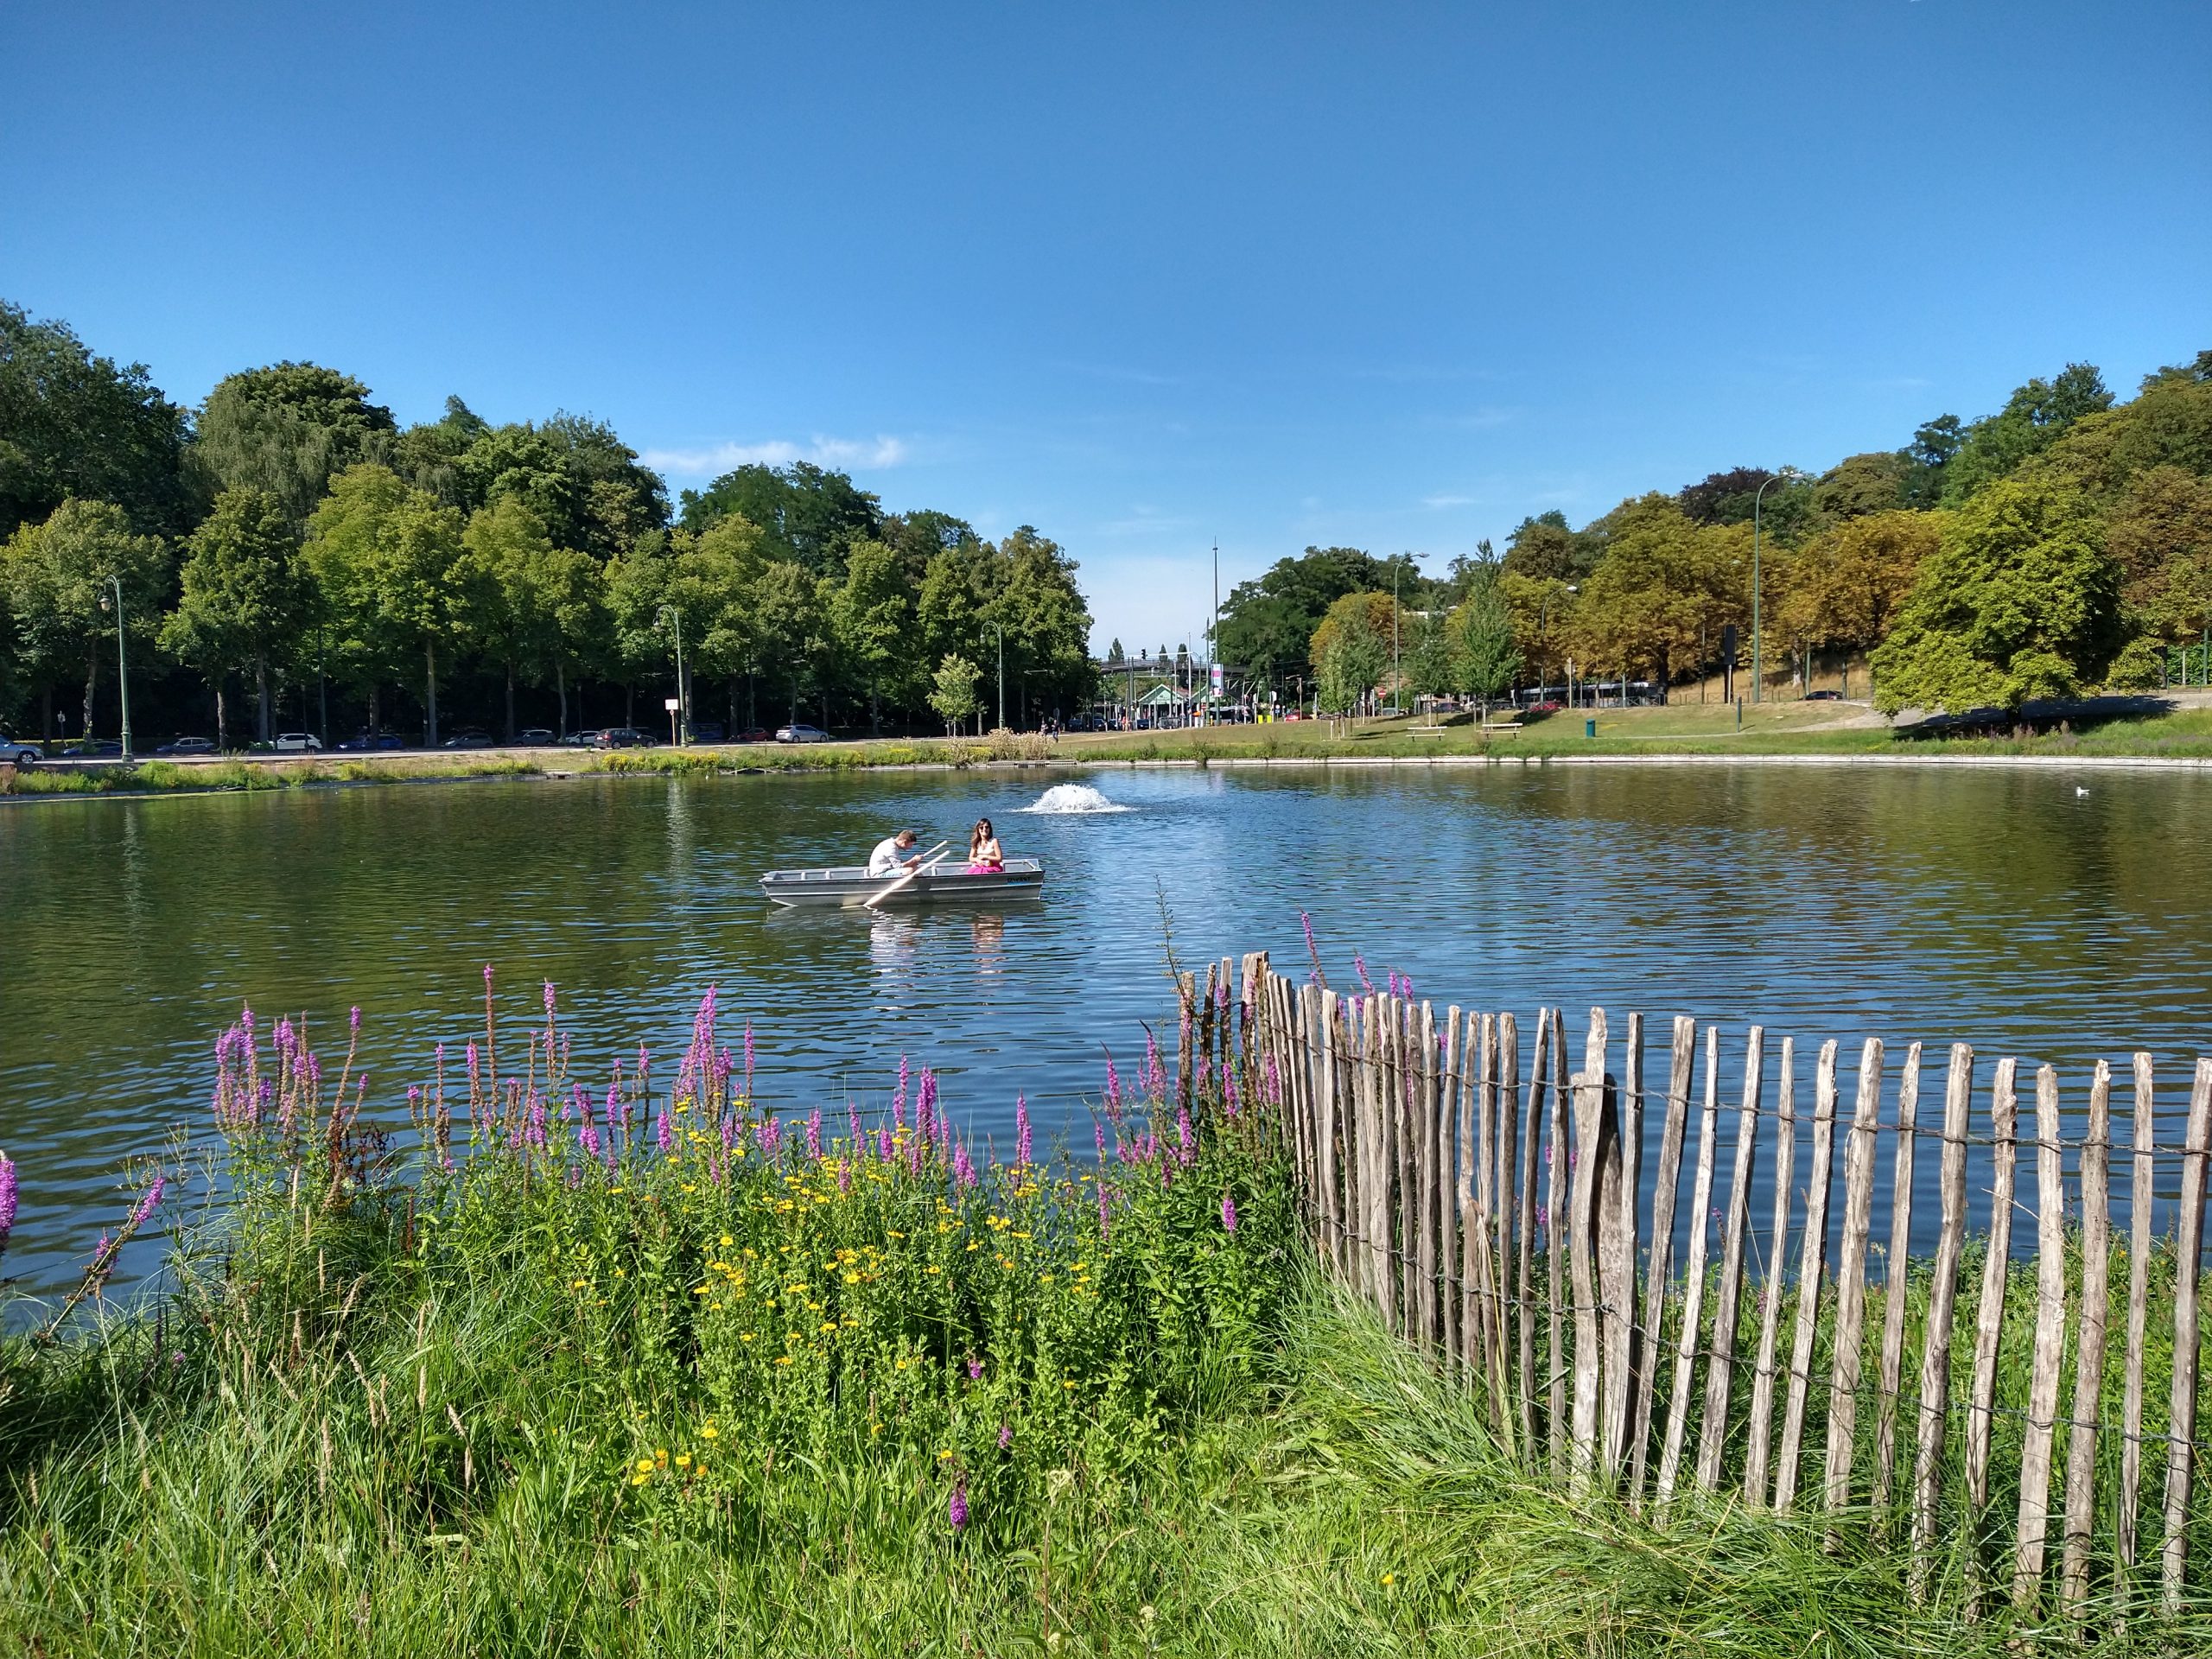 حديقة Parc de et Woluwe et etangs  Mellaerts